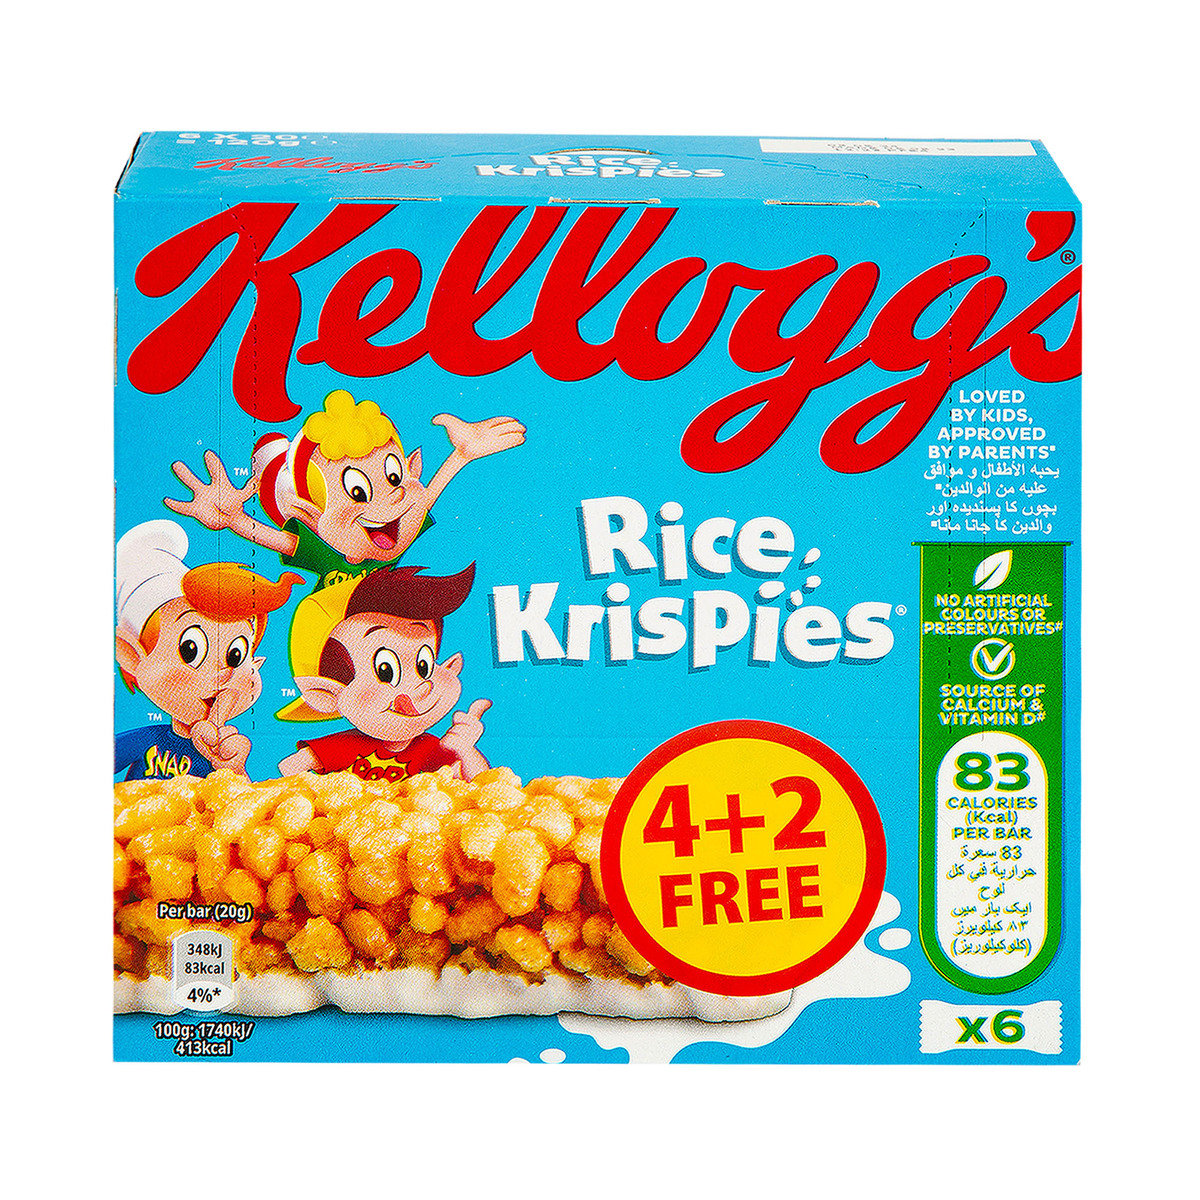 Kellogg's Rice Krispies Bar 20 g 4+2